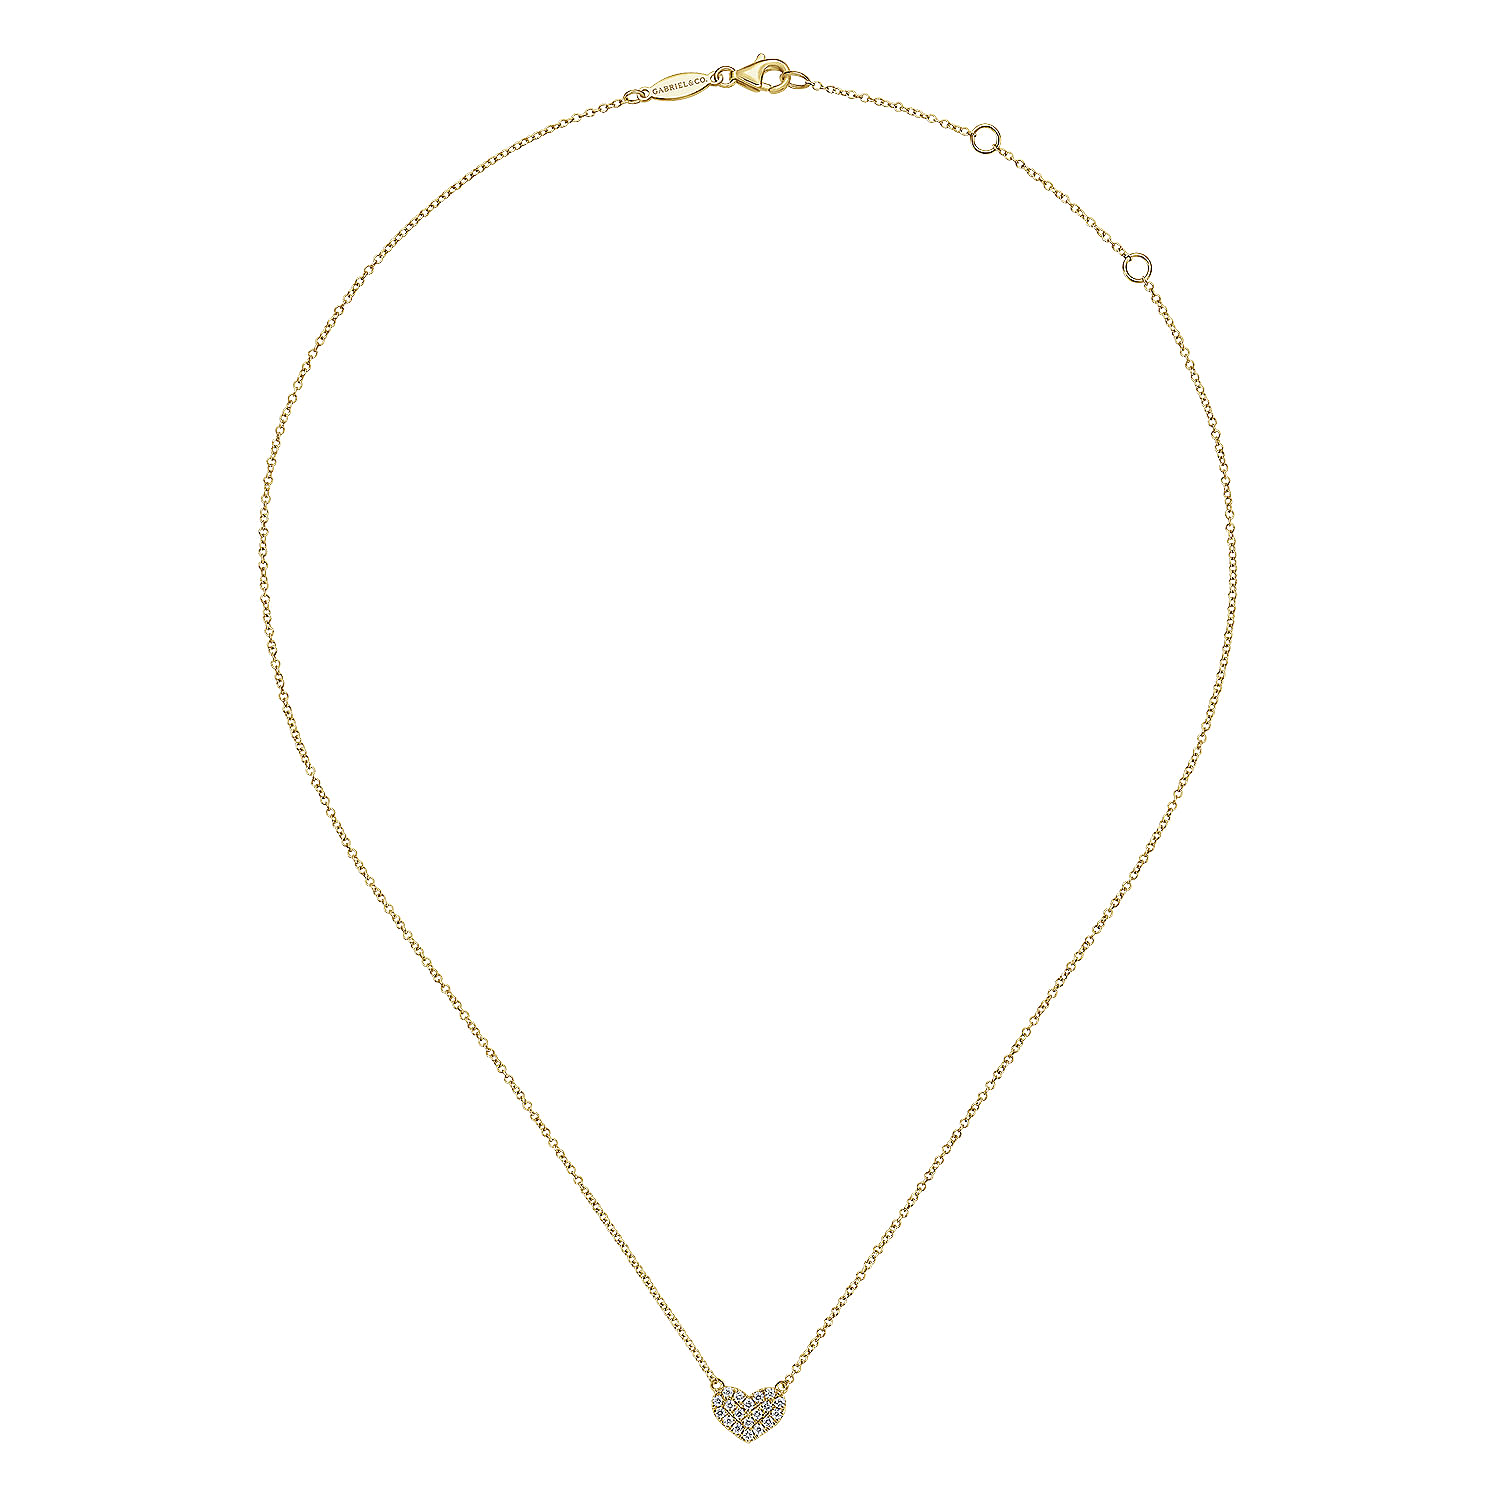 14K Yellow Gold Pavé Diamond Pendant Heart Necklace